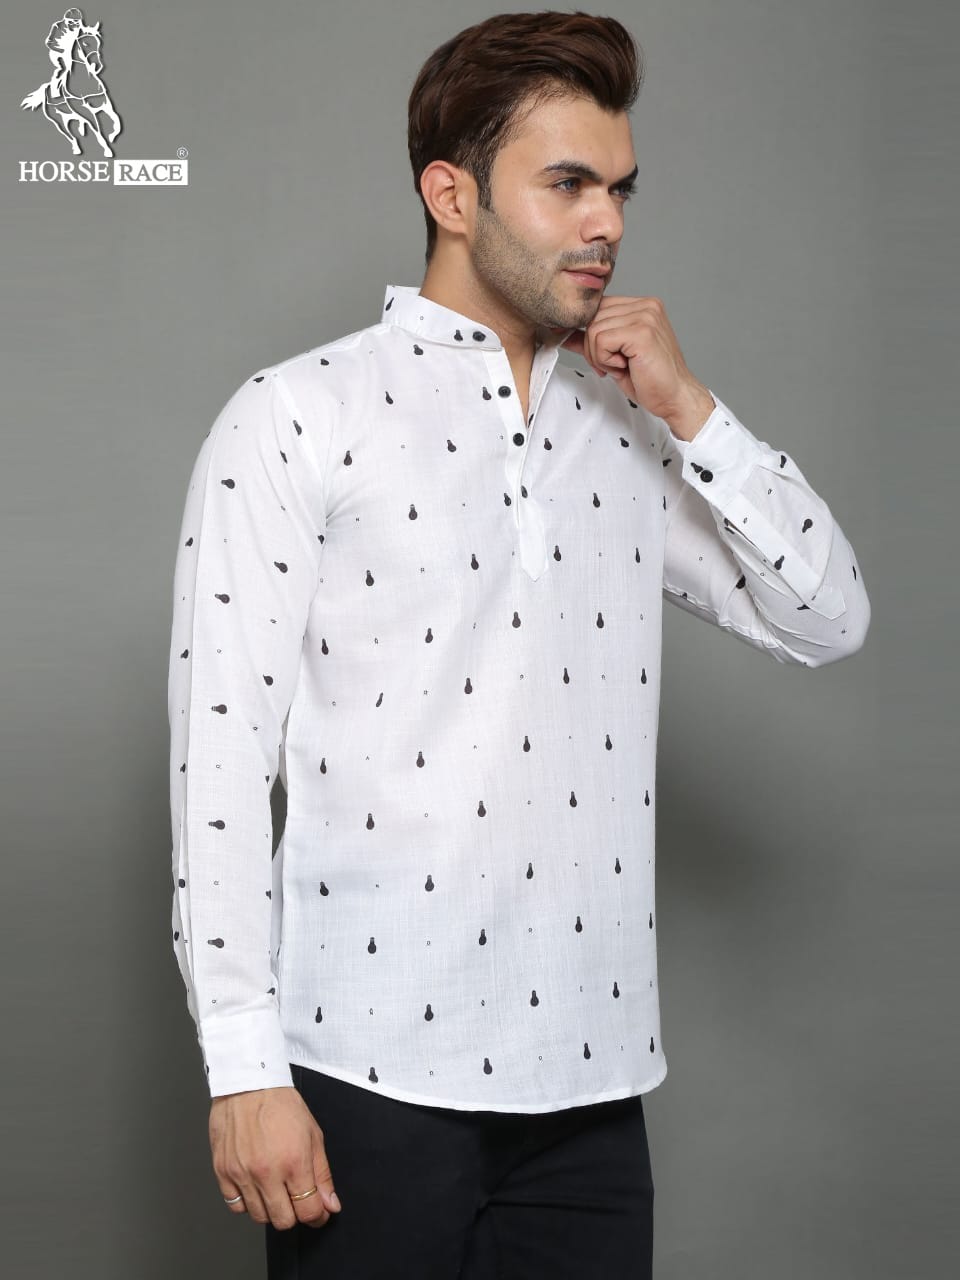 Details View - Kurta type shirt  photos - Casual Solid Kurta Shirt, Slim Fit, 100% Cotton, Stylish, Chinos, Tapered Denim, Sneakers, Dwarkesh Enterprise, Surat, Gujarat, India